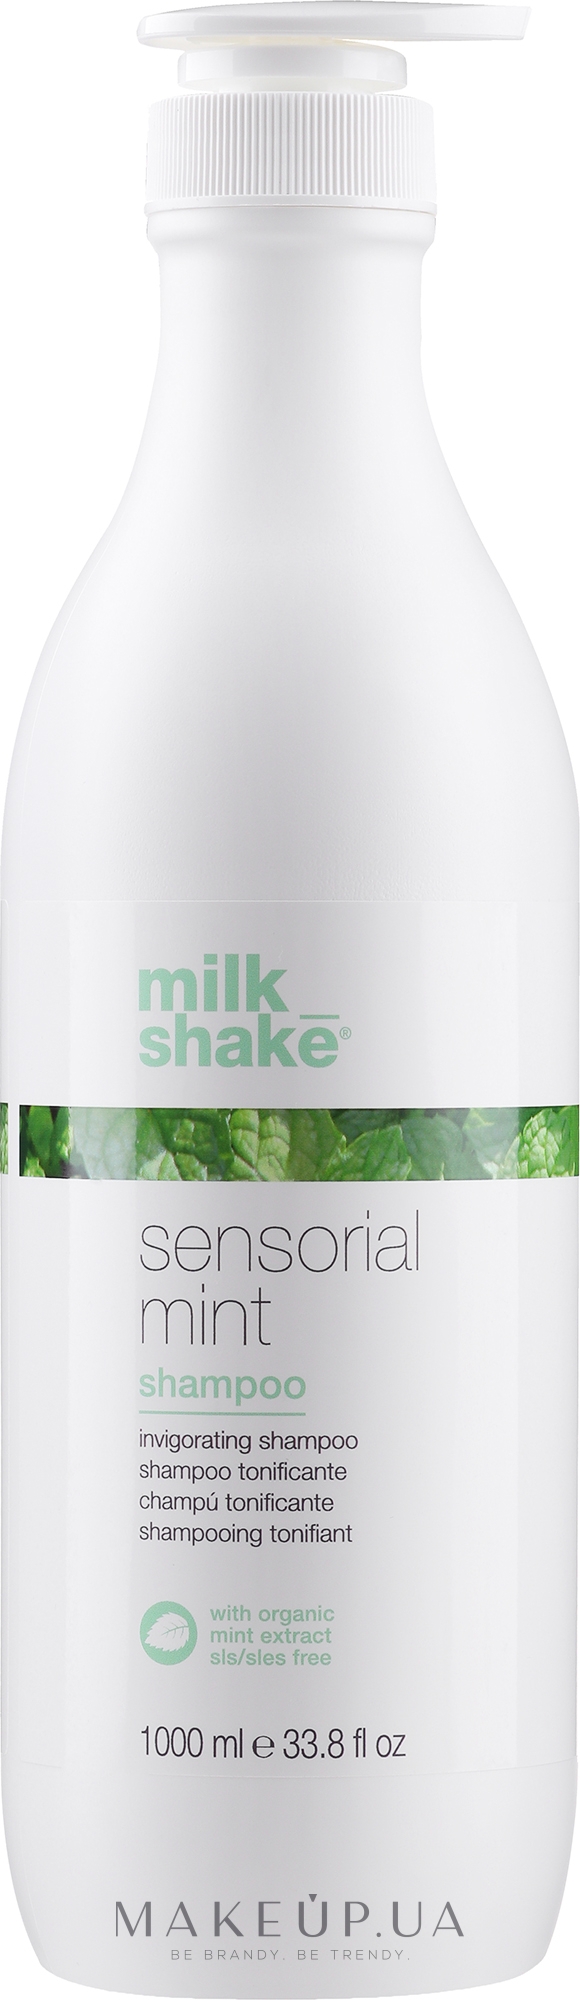 Бодрящий шампунь для волос - Milk Shake Sensorial Mint Shampoo — фото 1000ml